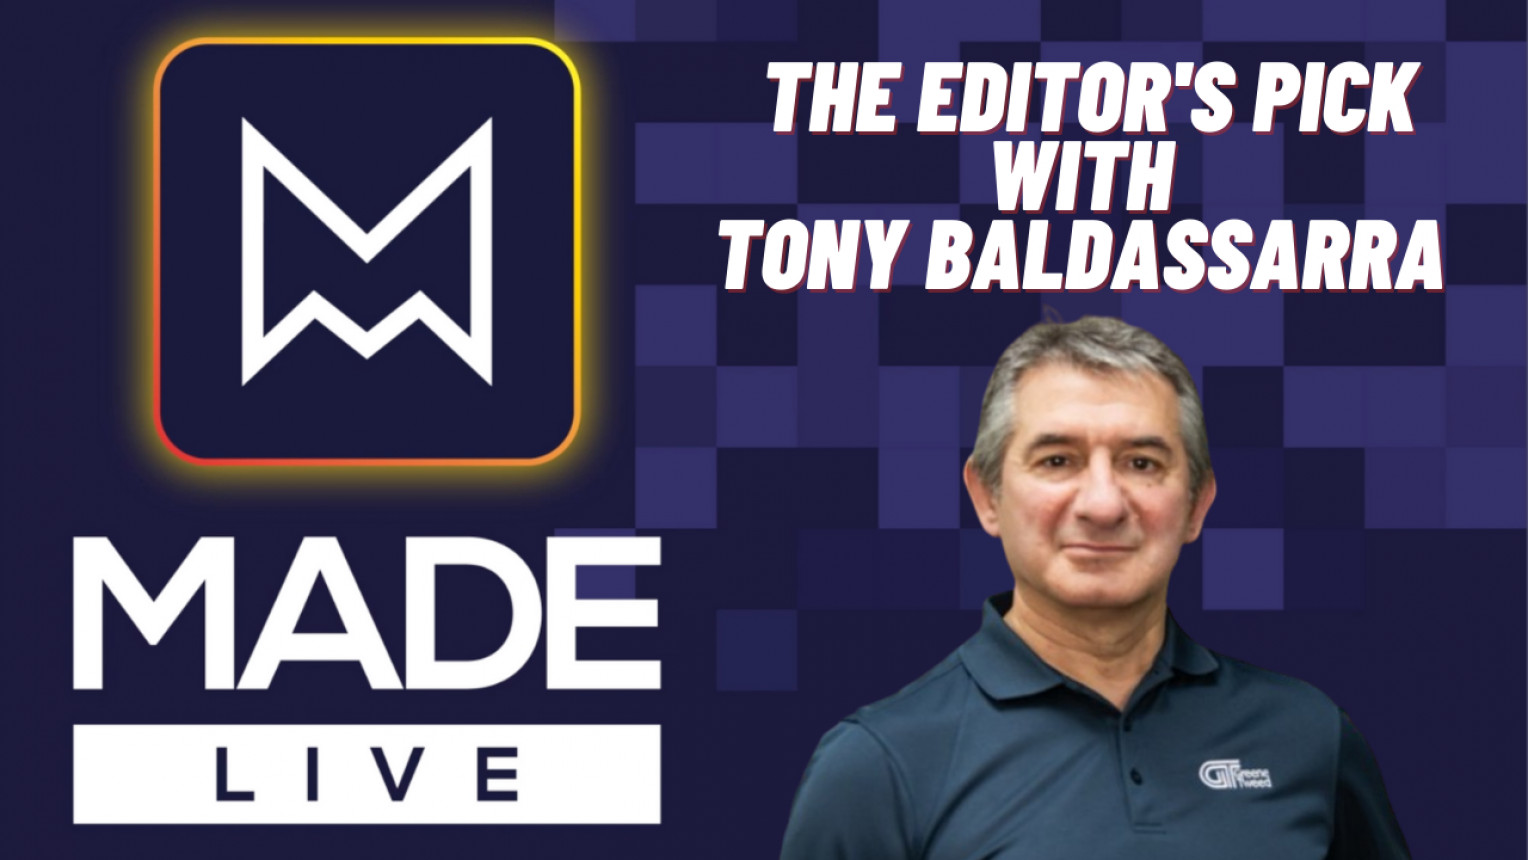 The Editor's Pick with Tony Baldassarra